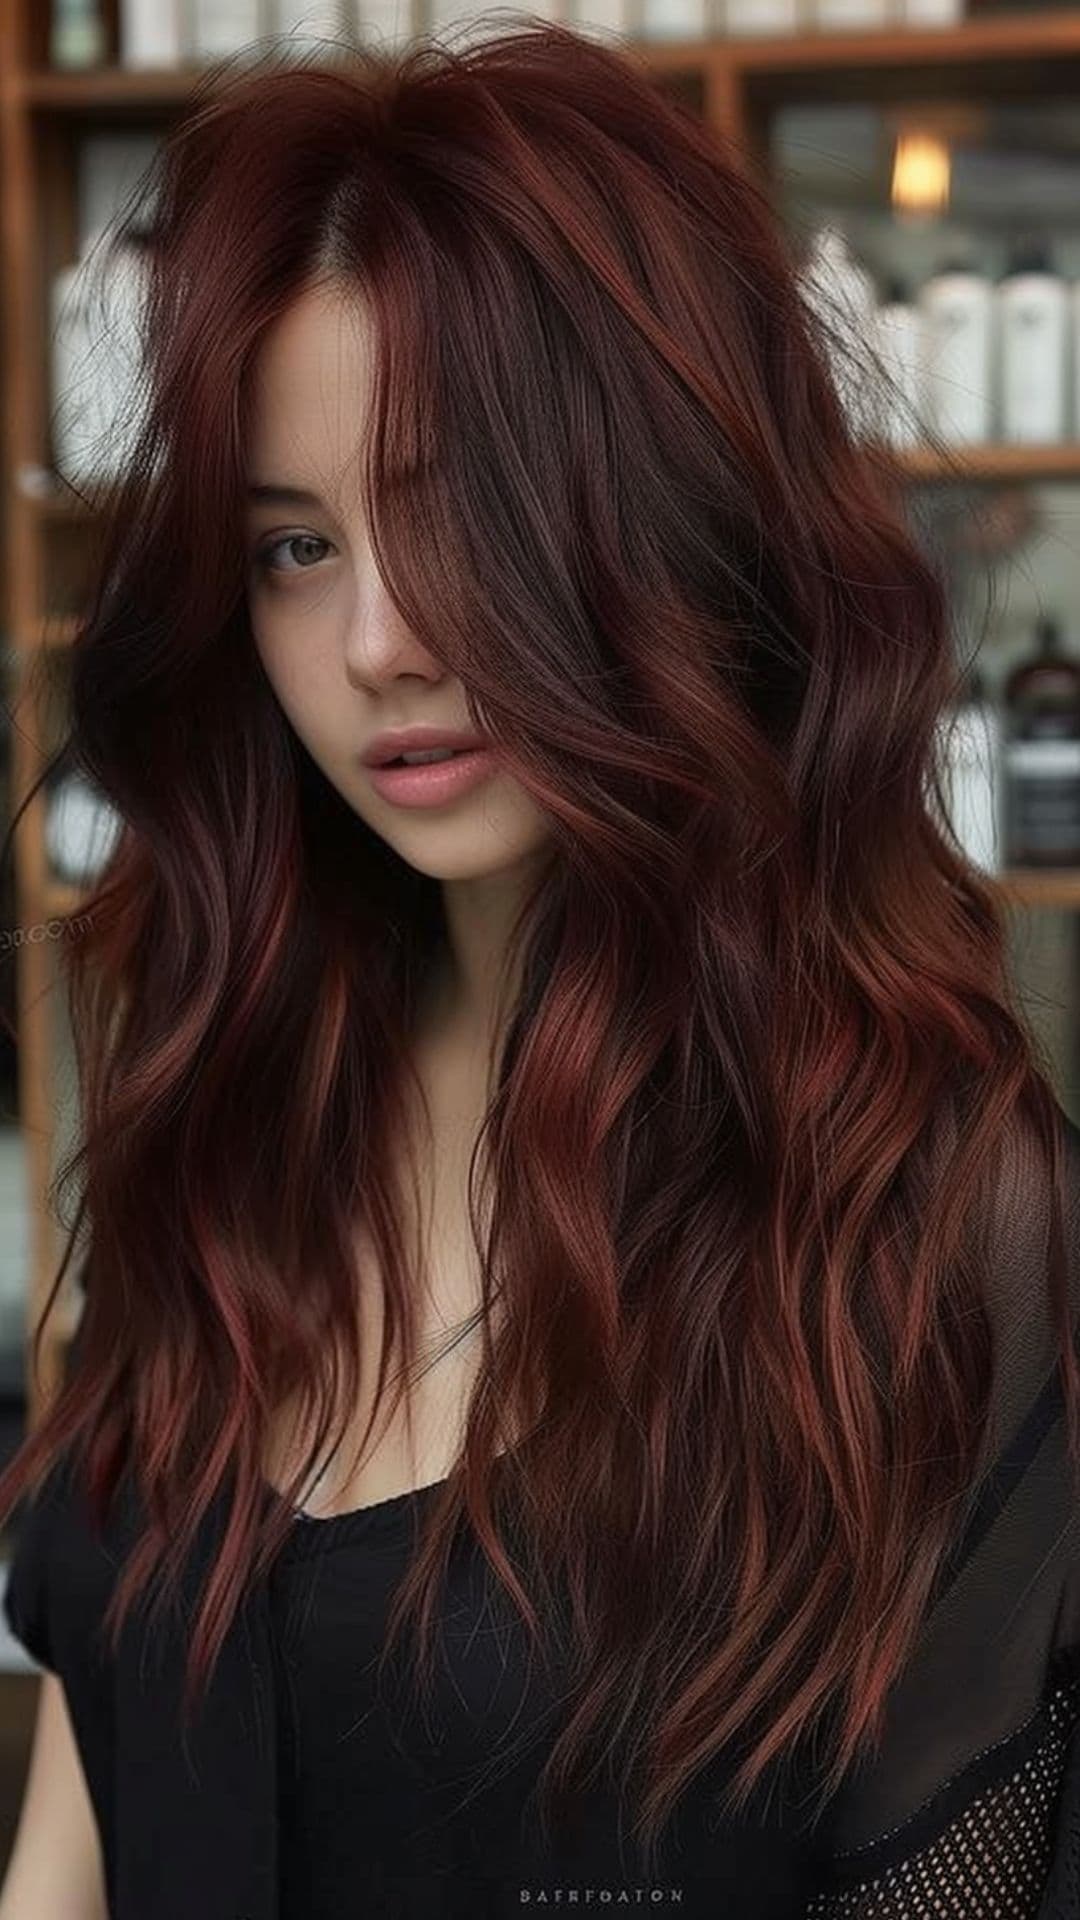 A woman modelling a dark red velvet hair.